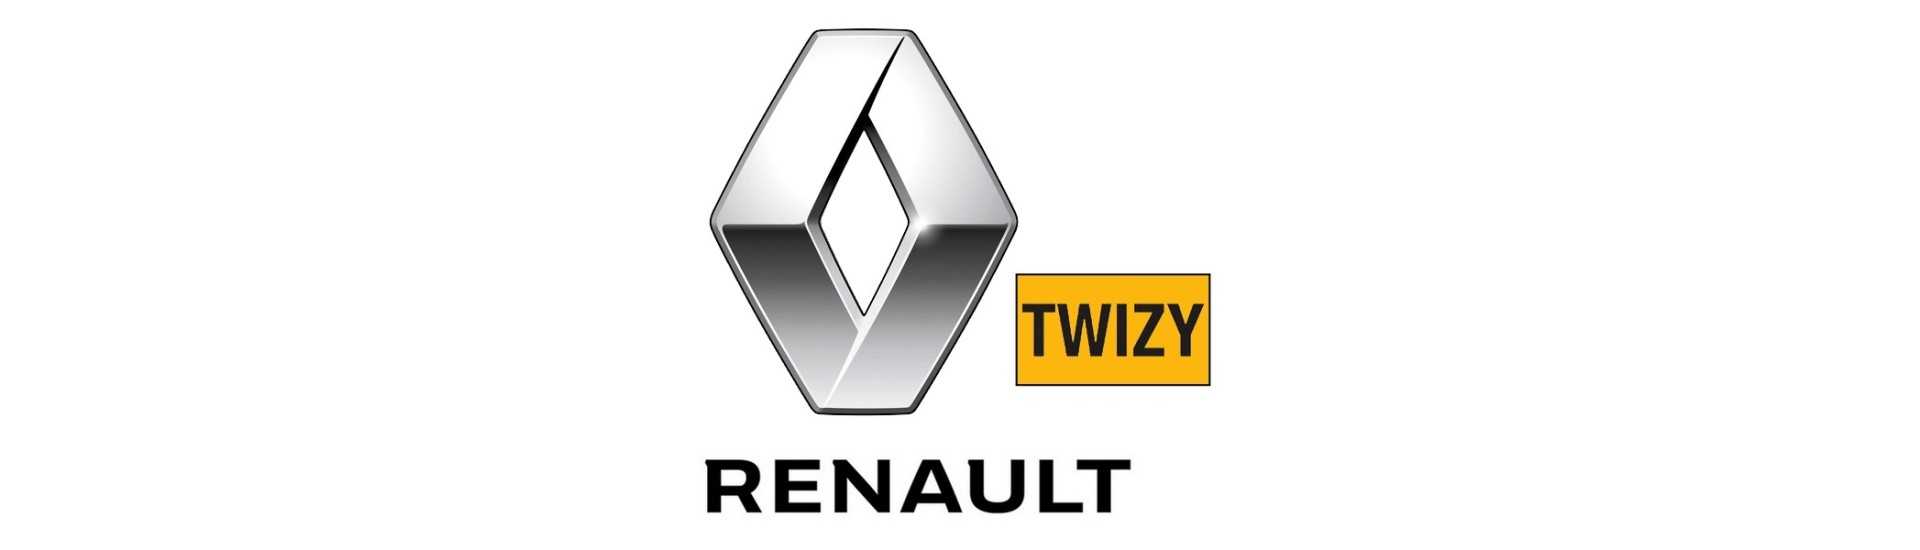 Relais / electronic car module without a permit Renault Twizy